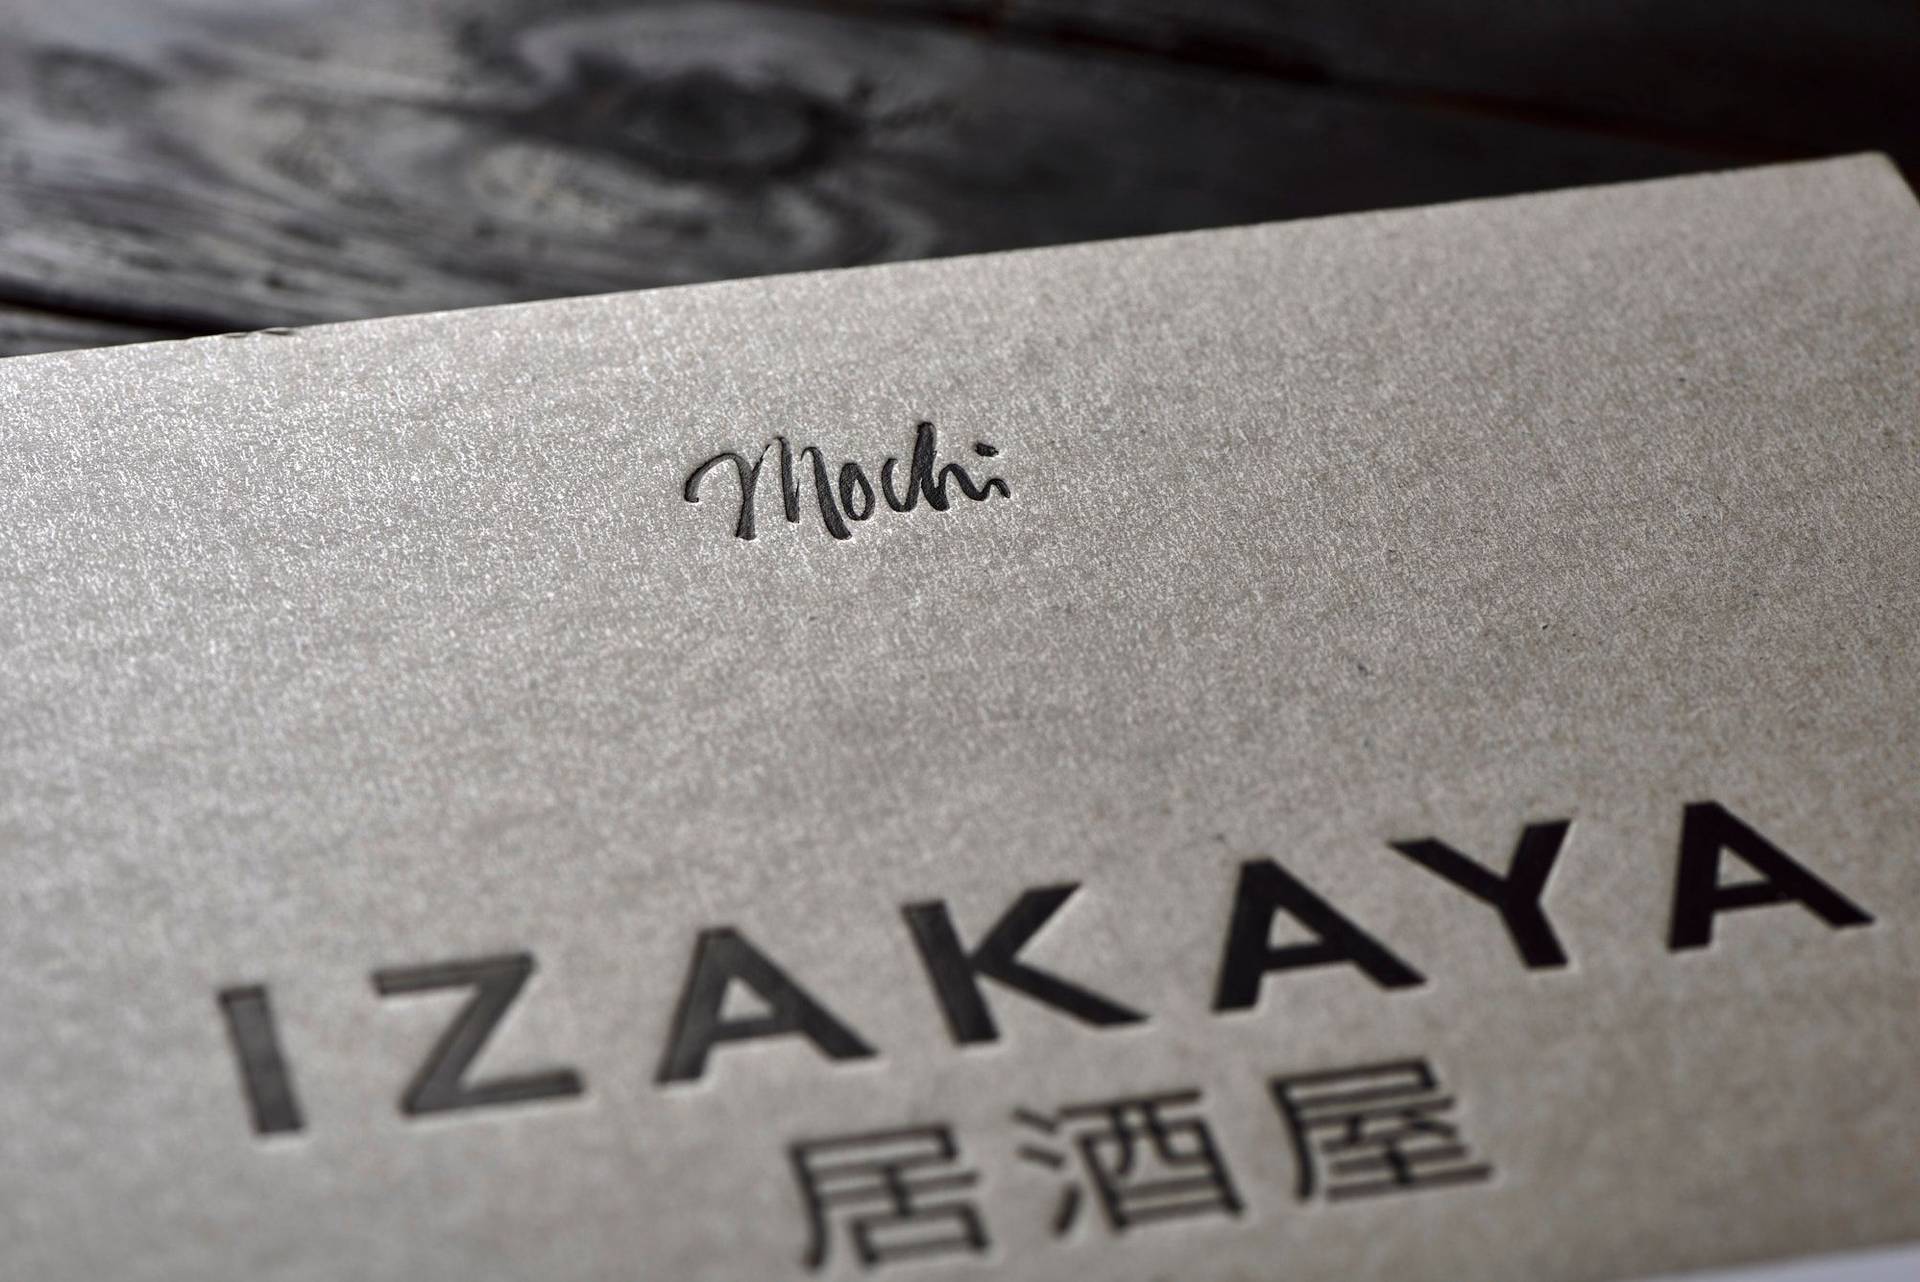 izakaya cookbook with black wooden background